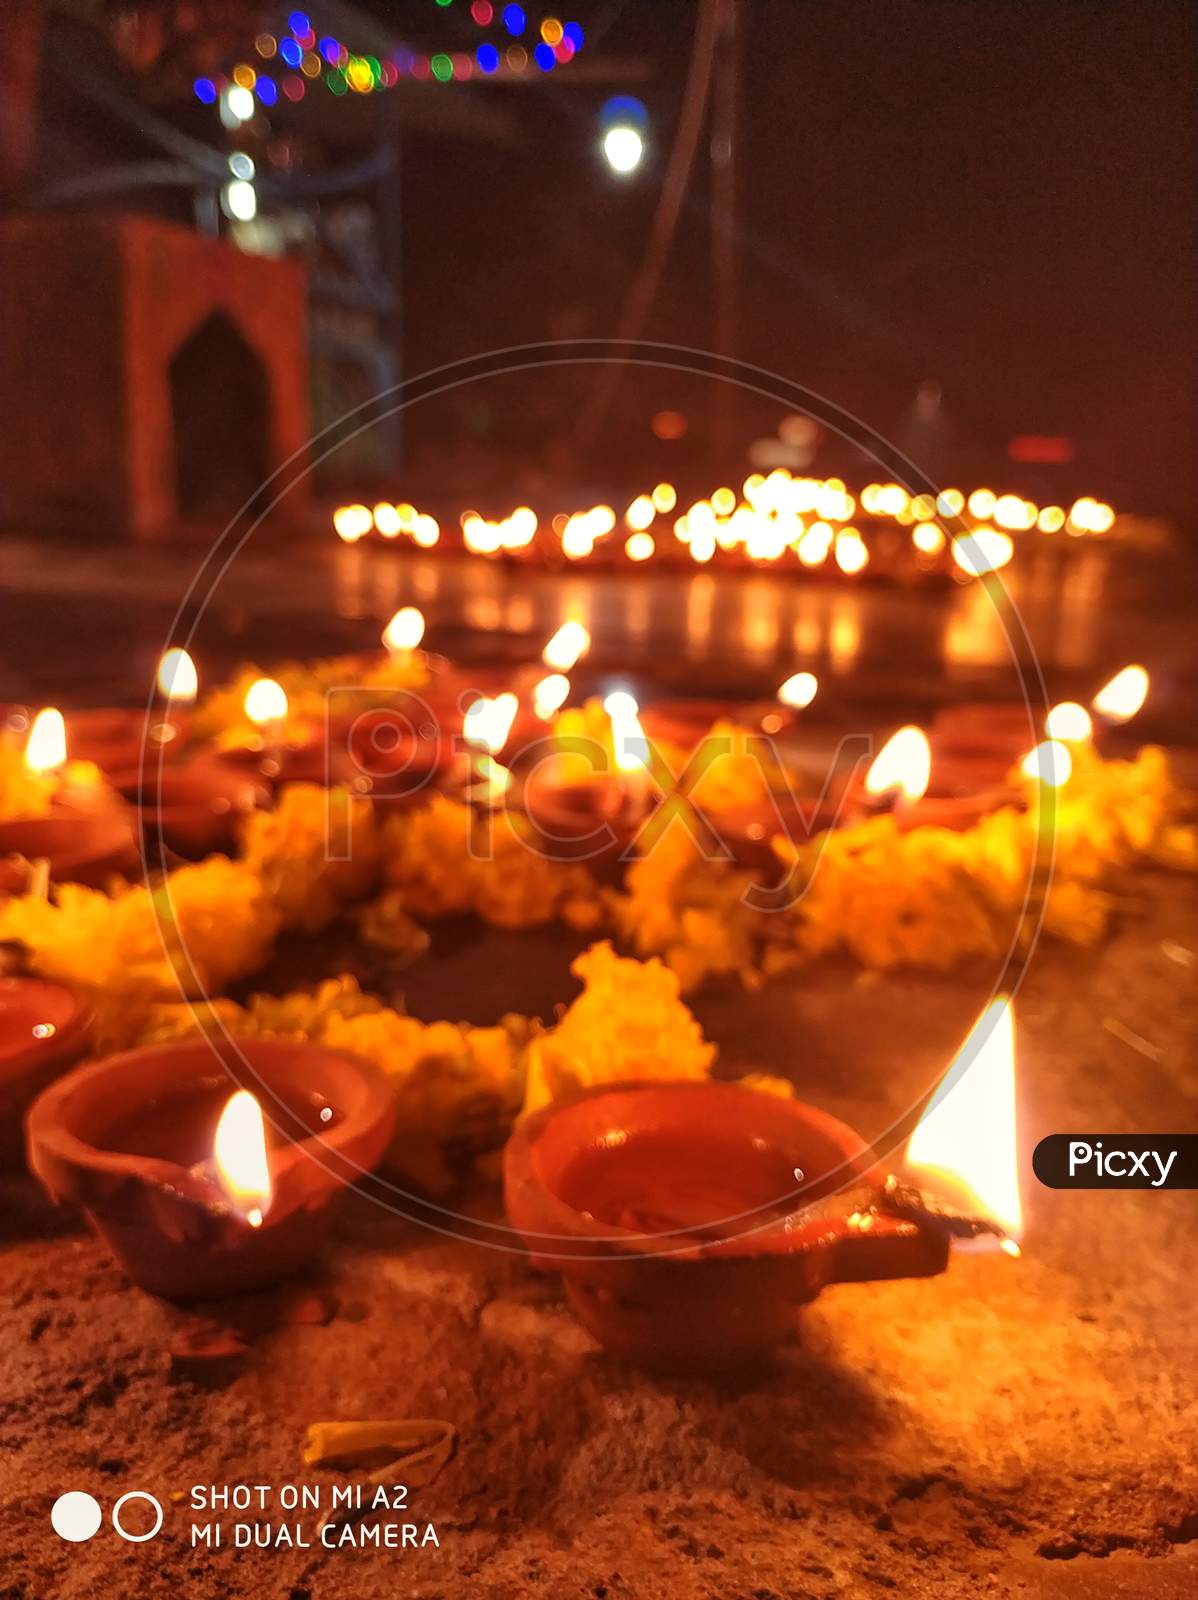 Festival of lights, Diwali (2019) at Kurnool